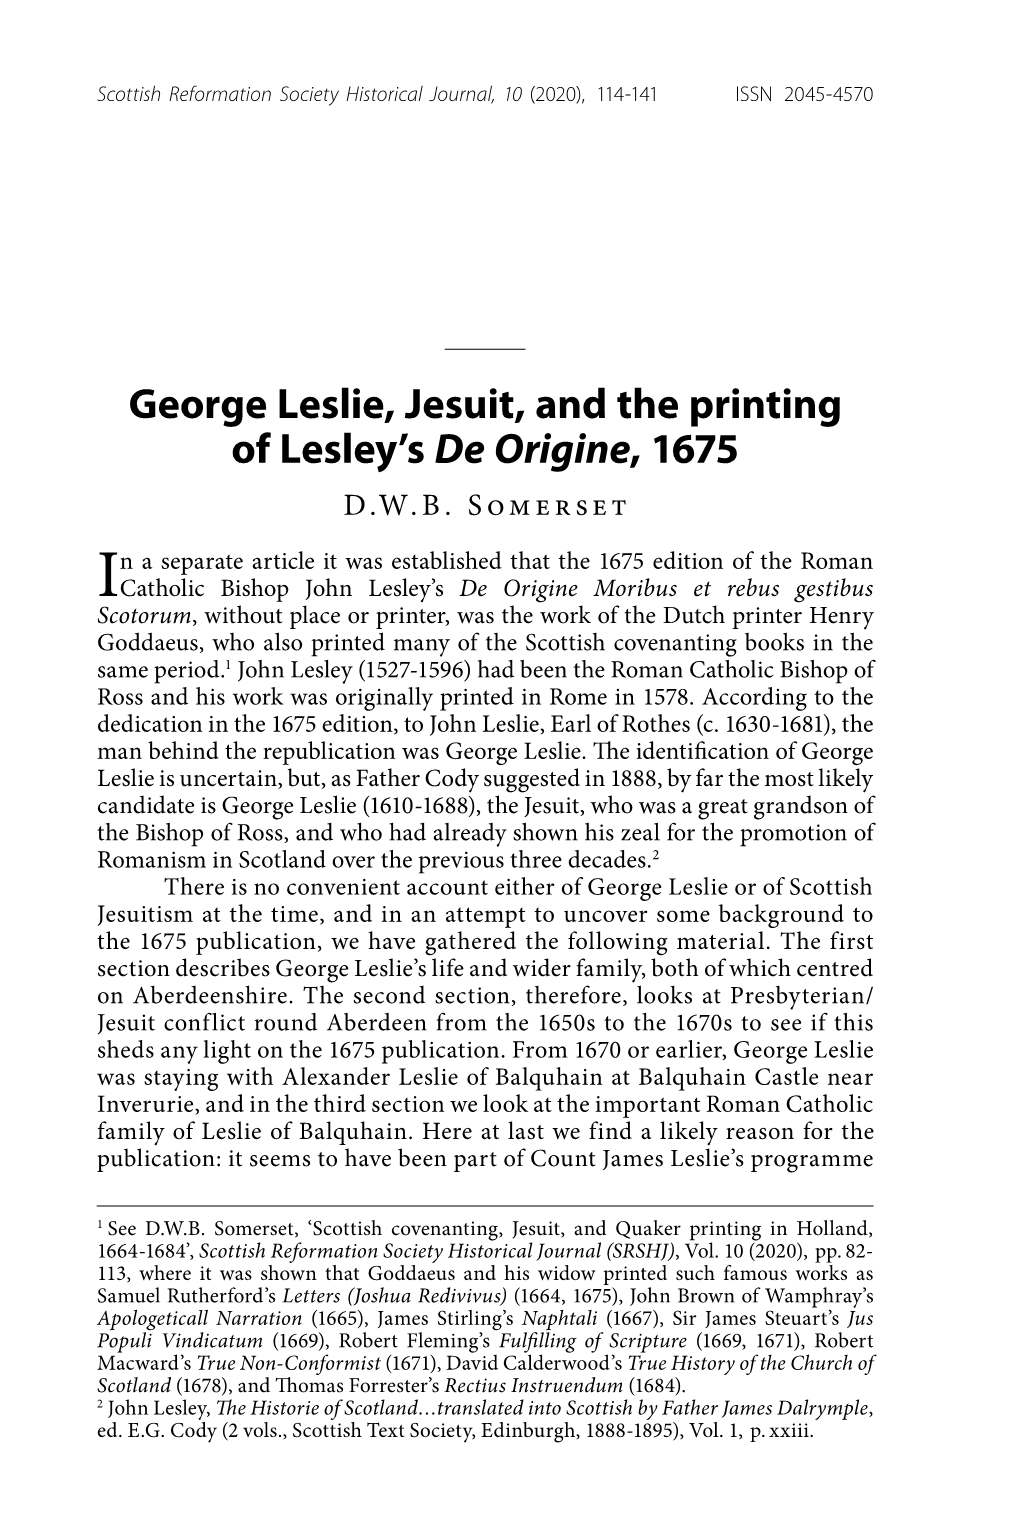 George Leslie, Jesuit, and the Printing of Lesley's De Origine, 1675